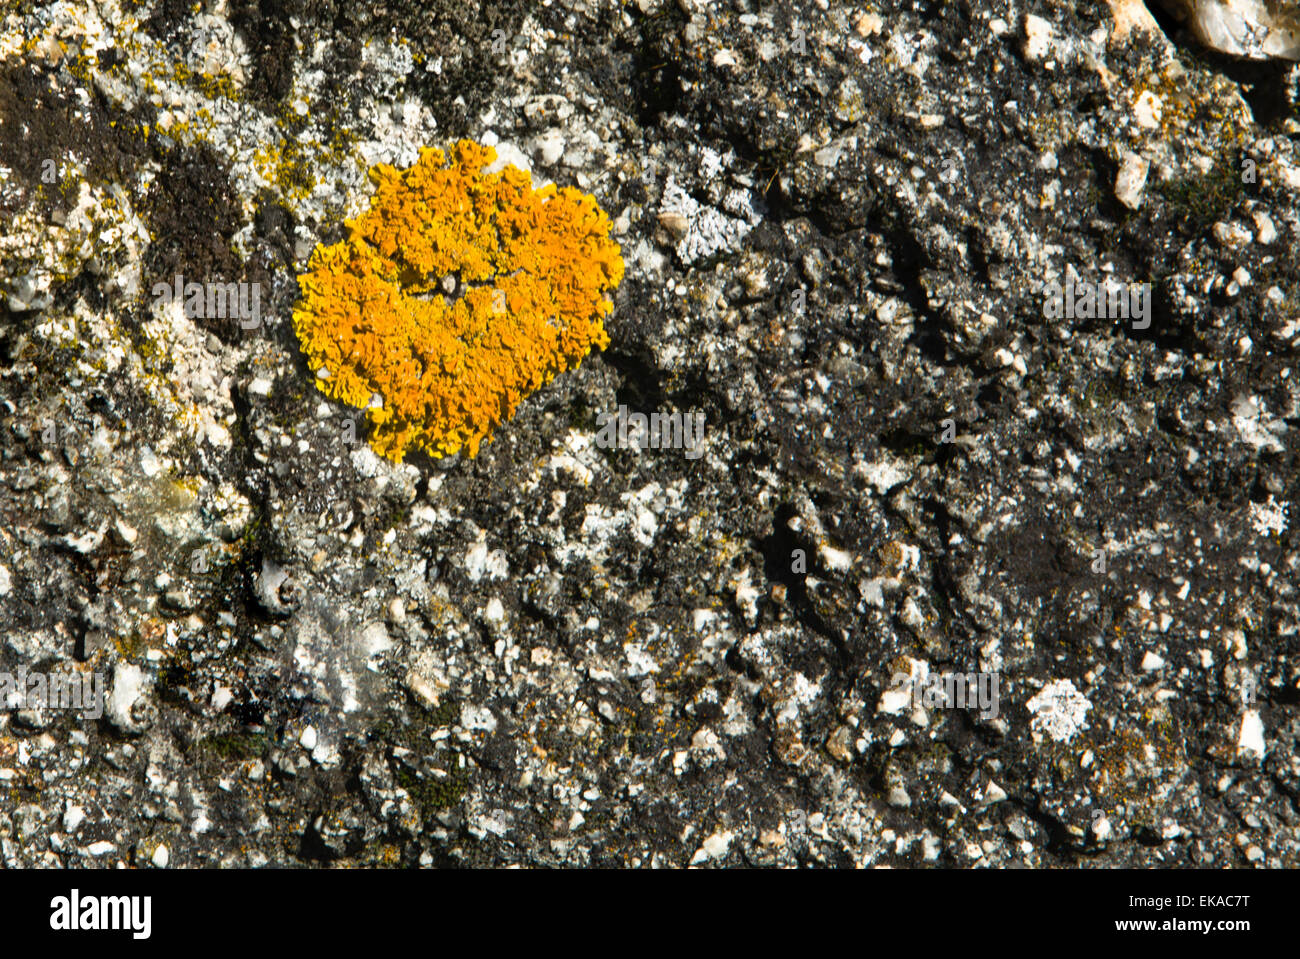 Natural environment in Valencia de Alcantara with lichen on granitic blocks, Extremadura, Spain Stock Photo